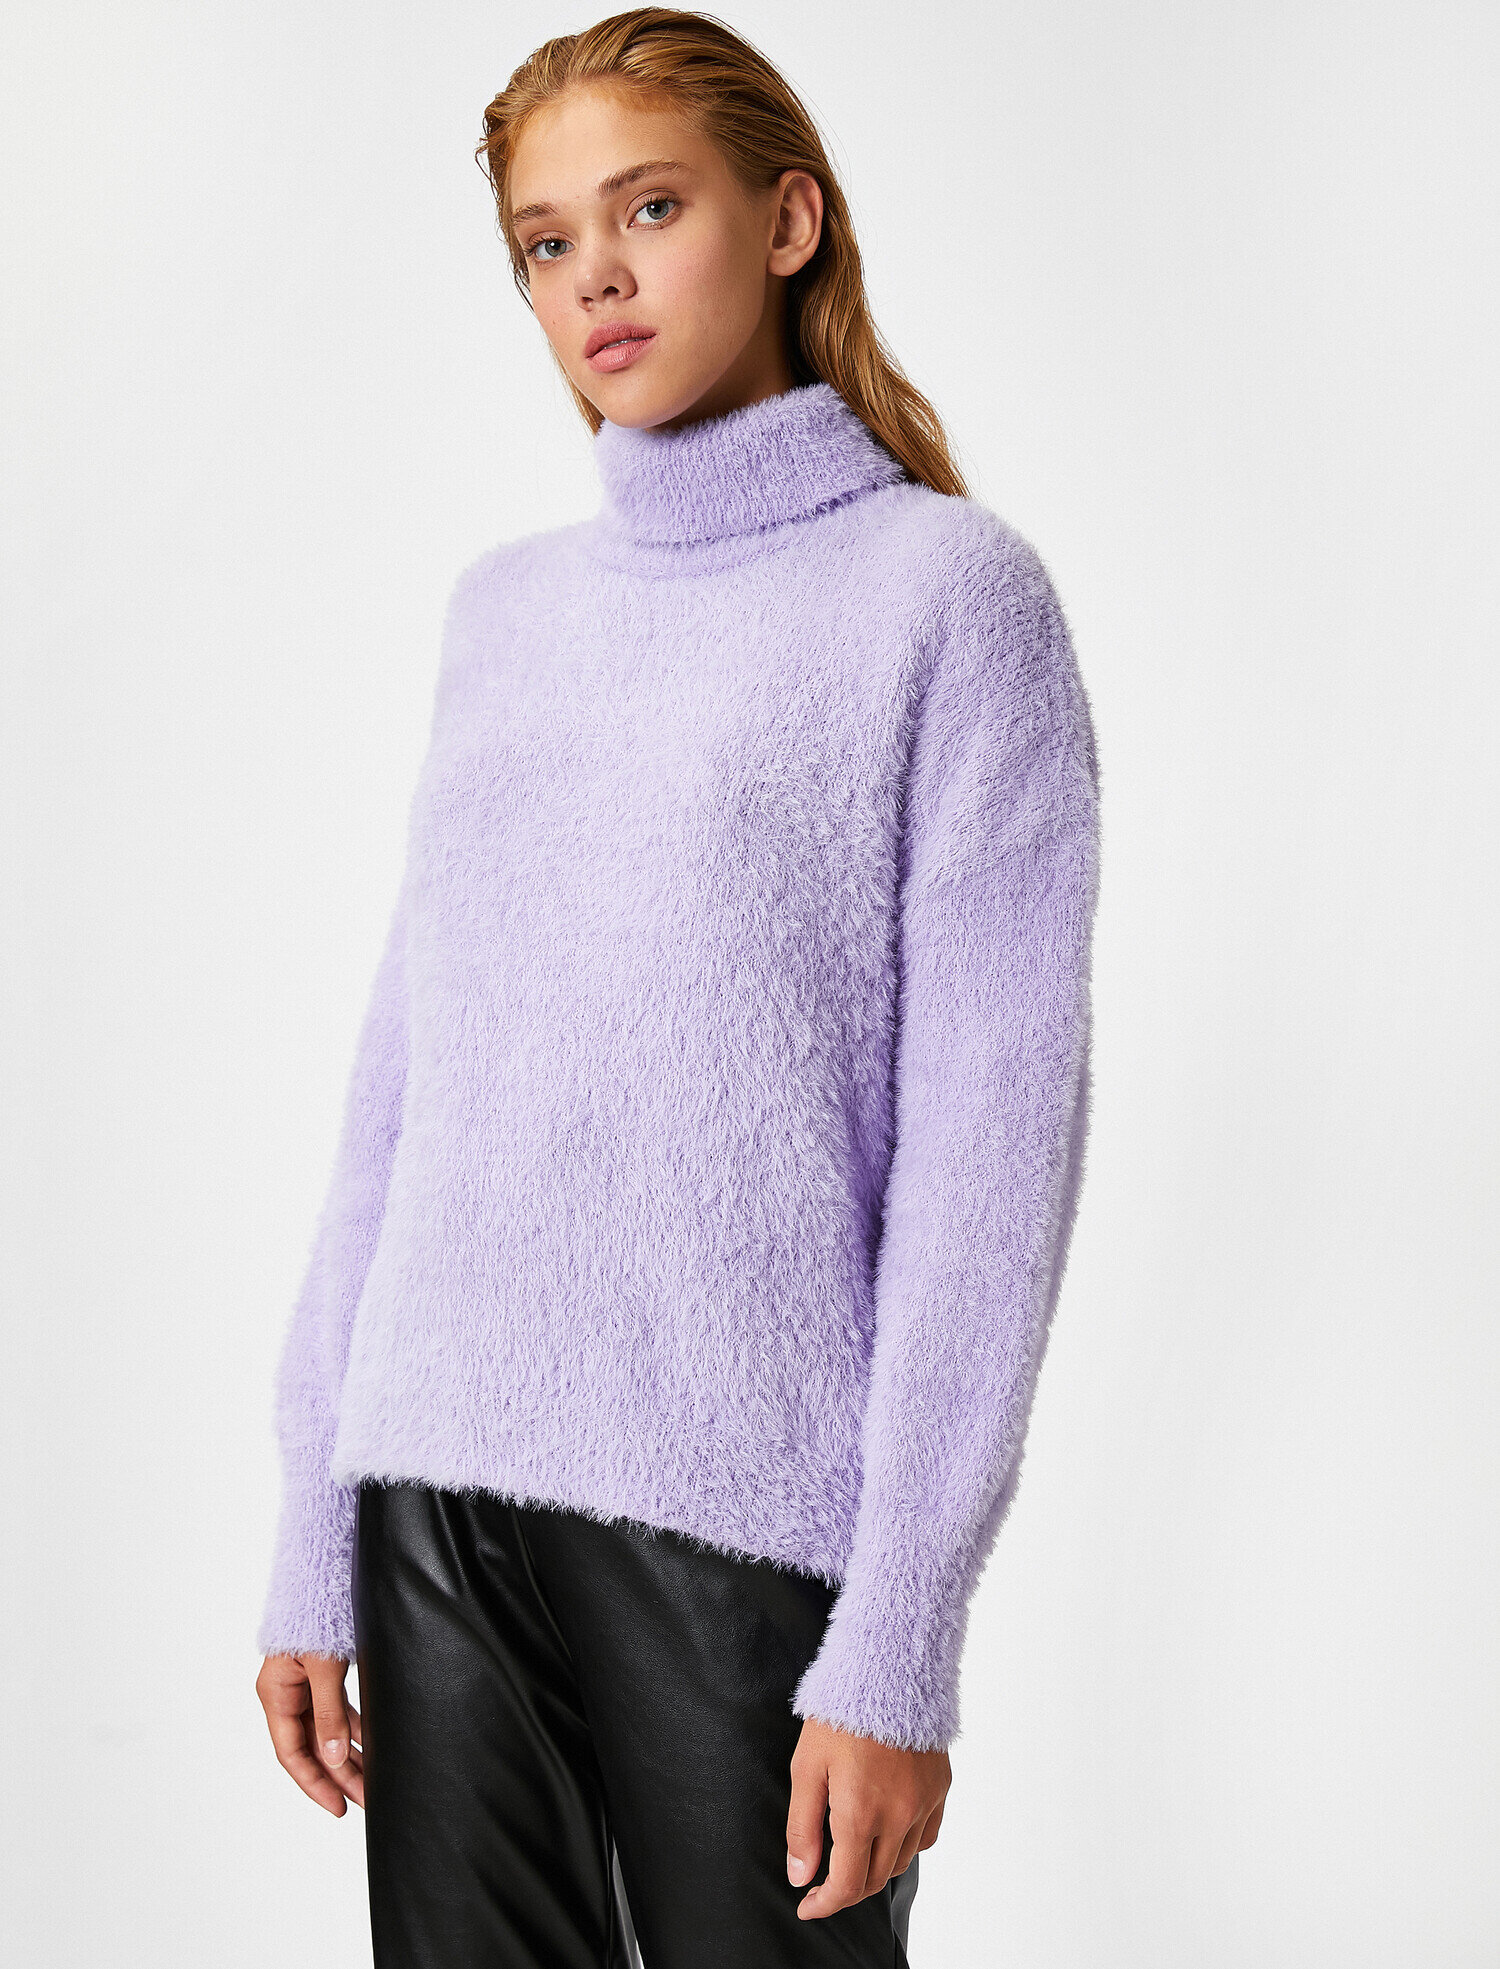 WOMEN FASHION Jumpers & Sweatshirts Jumper Basic Yessica jumper Purple S discount 62% 